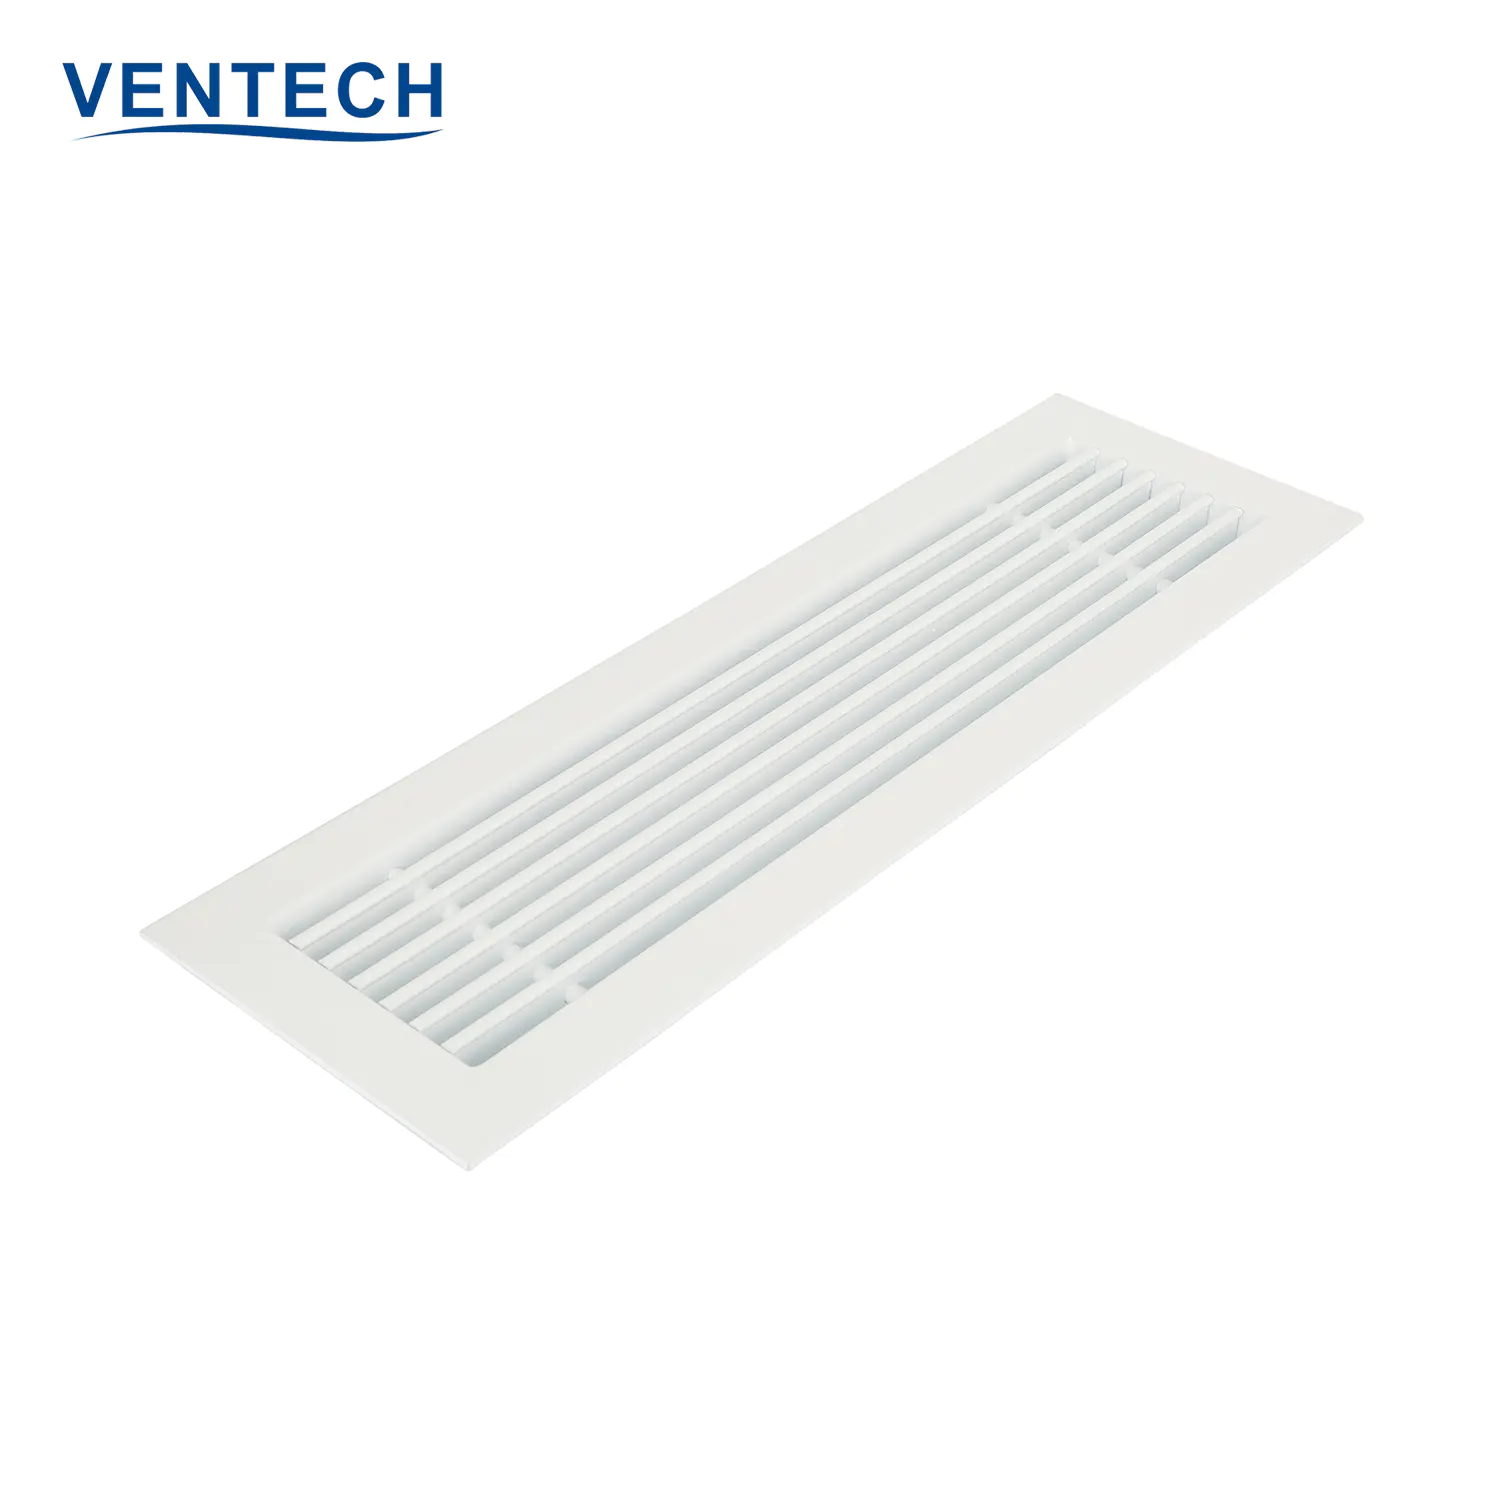 Ventech High Quality Supply Linear Bar Aluminum Ventilation Air Grille